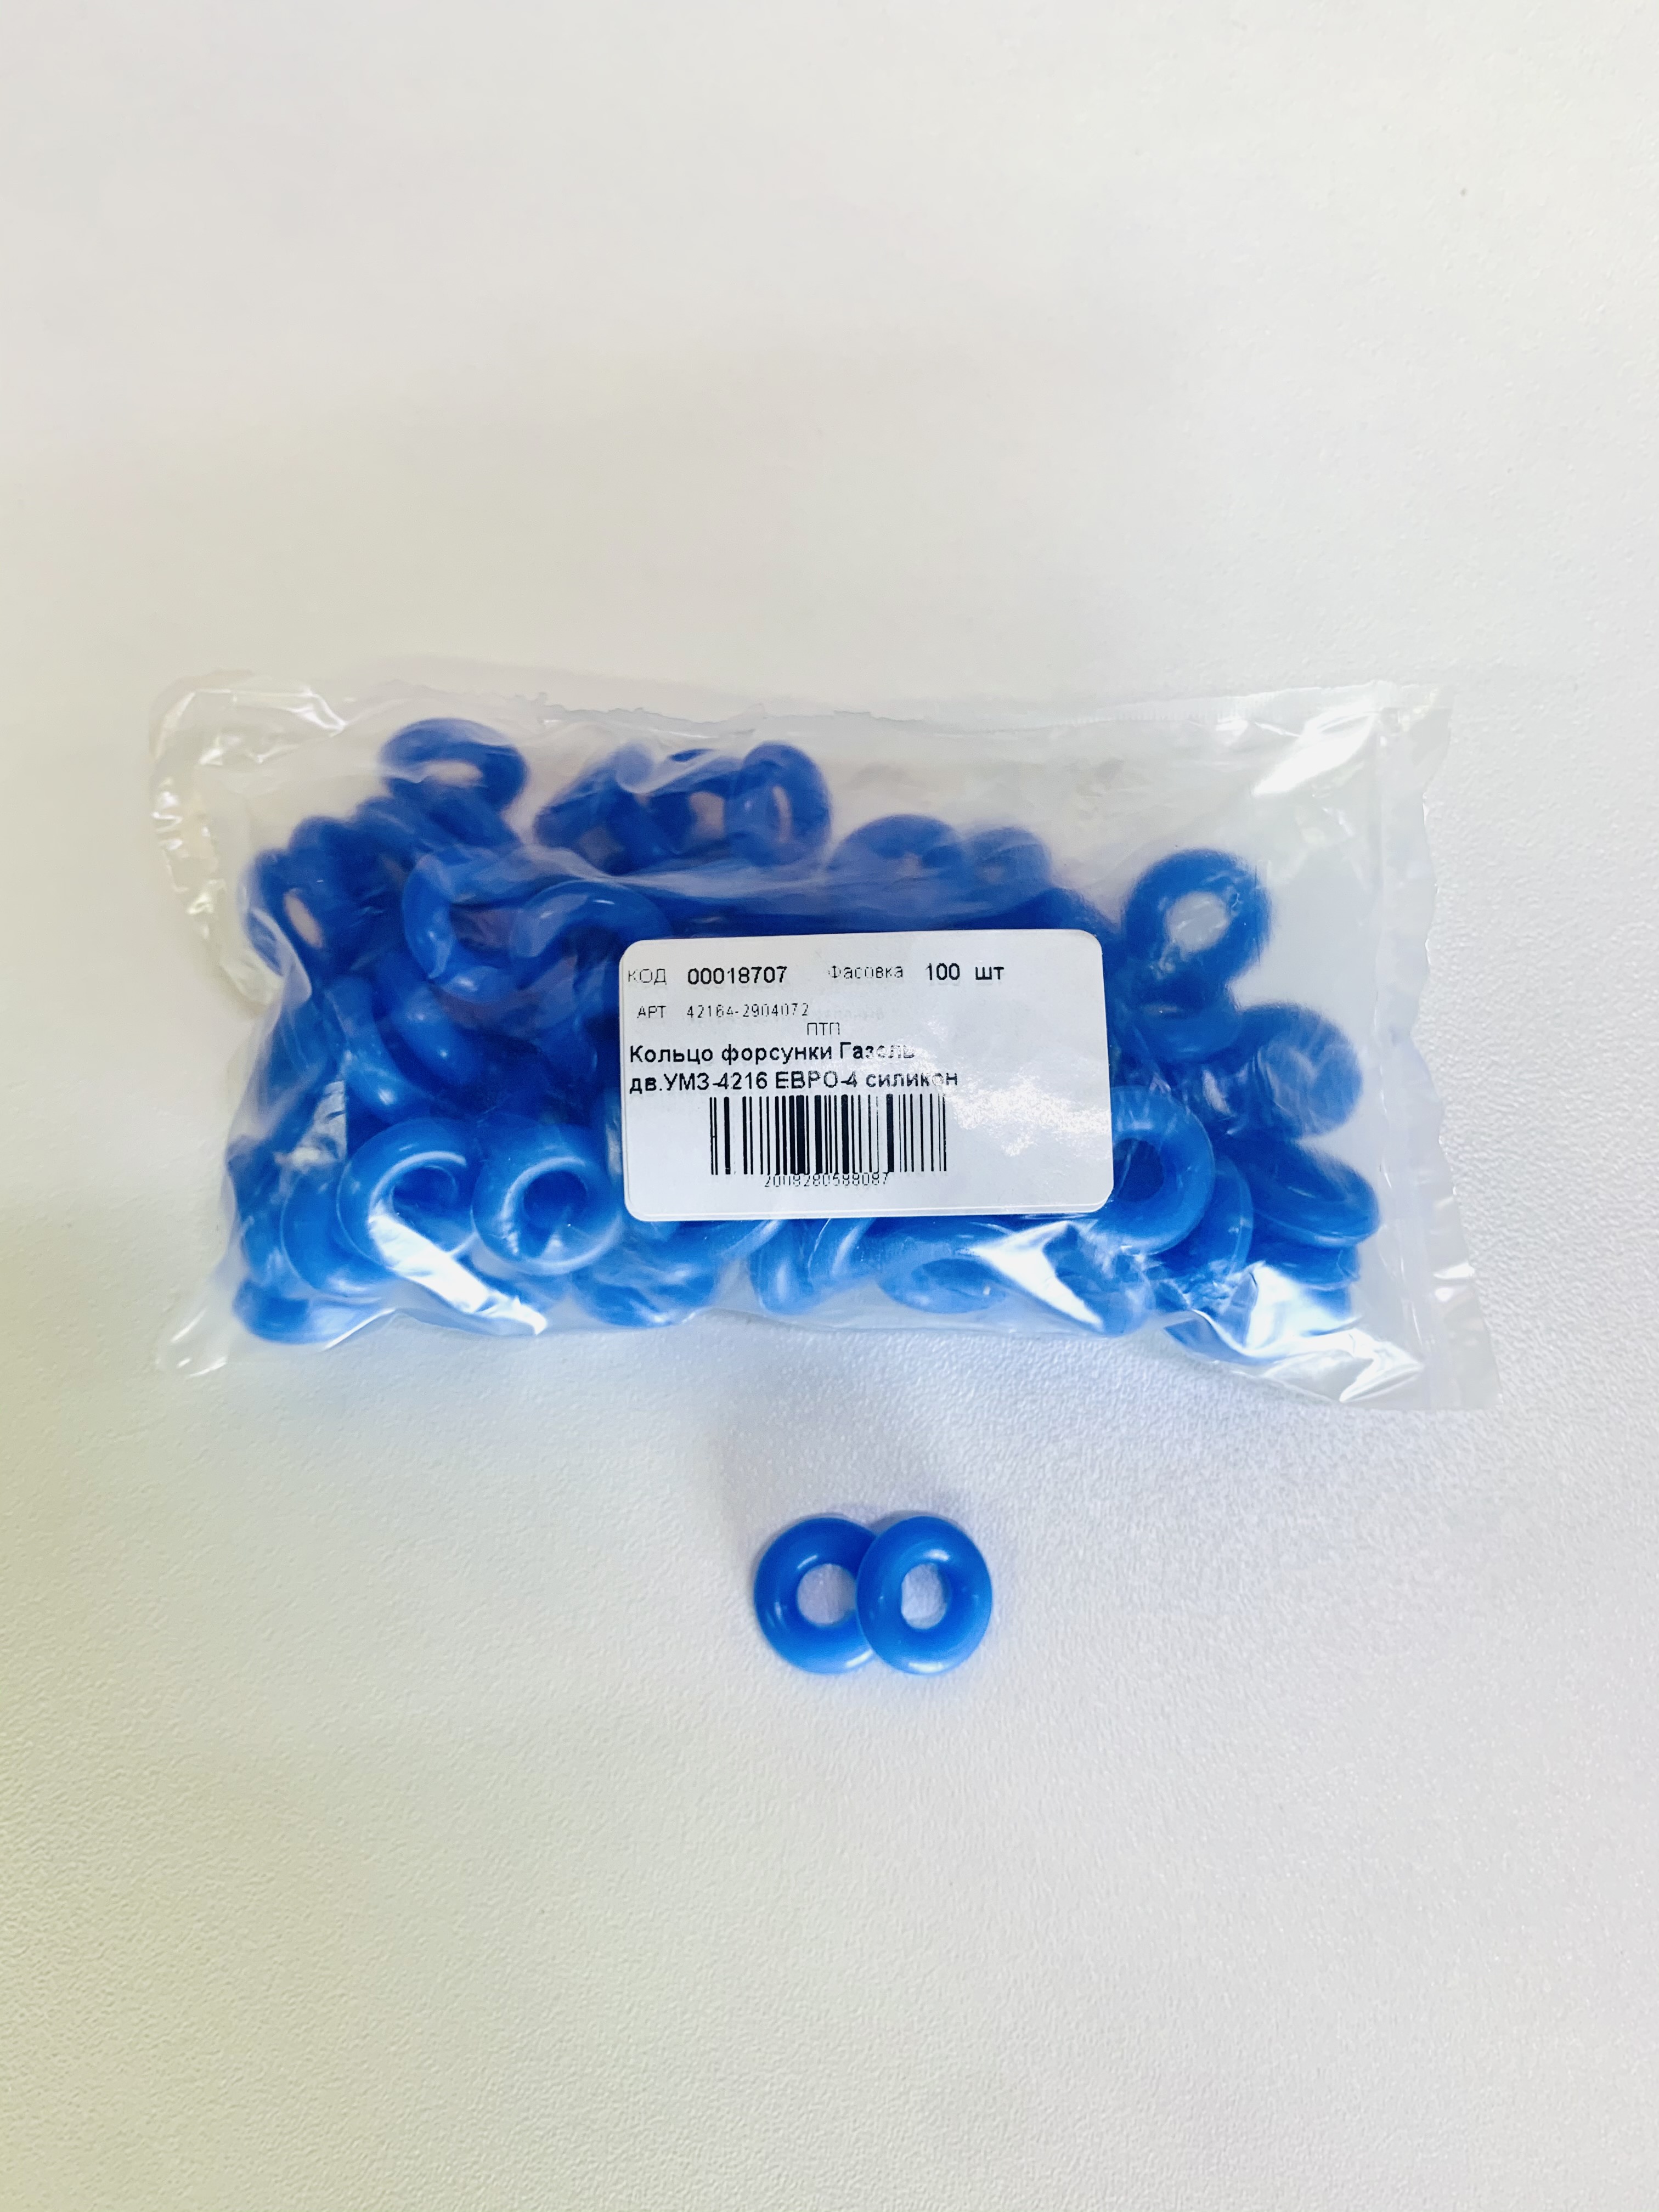 Кольцо форсунки Газель дв.УМЗ-4216 ЕВРО-4 силикон синий (широкое) 